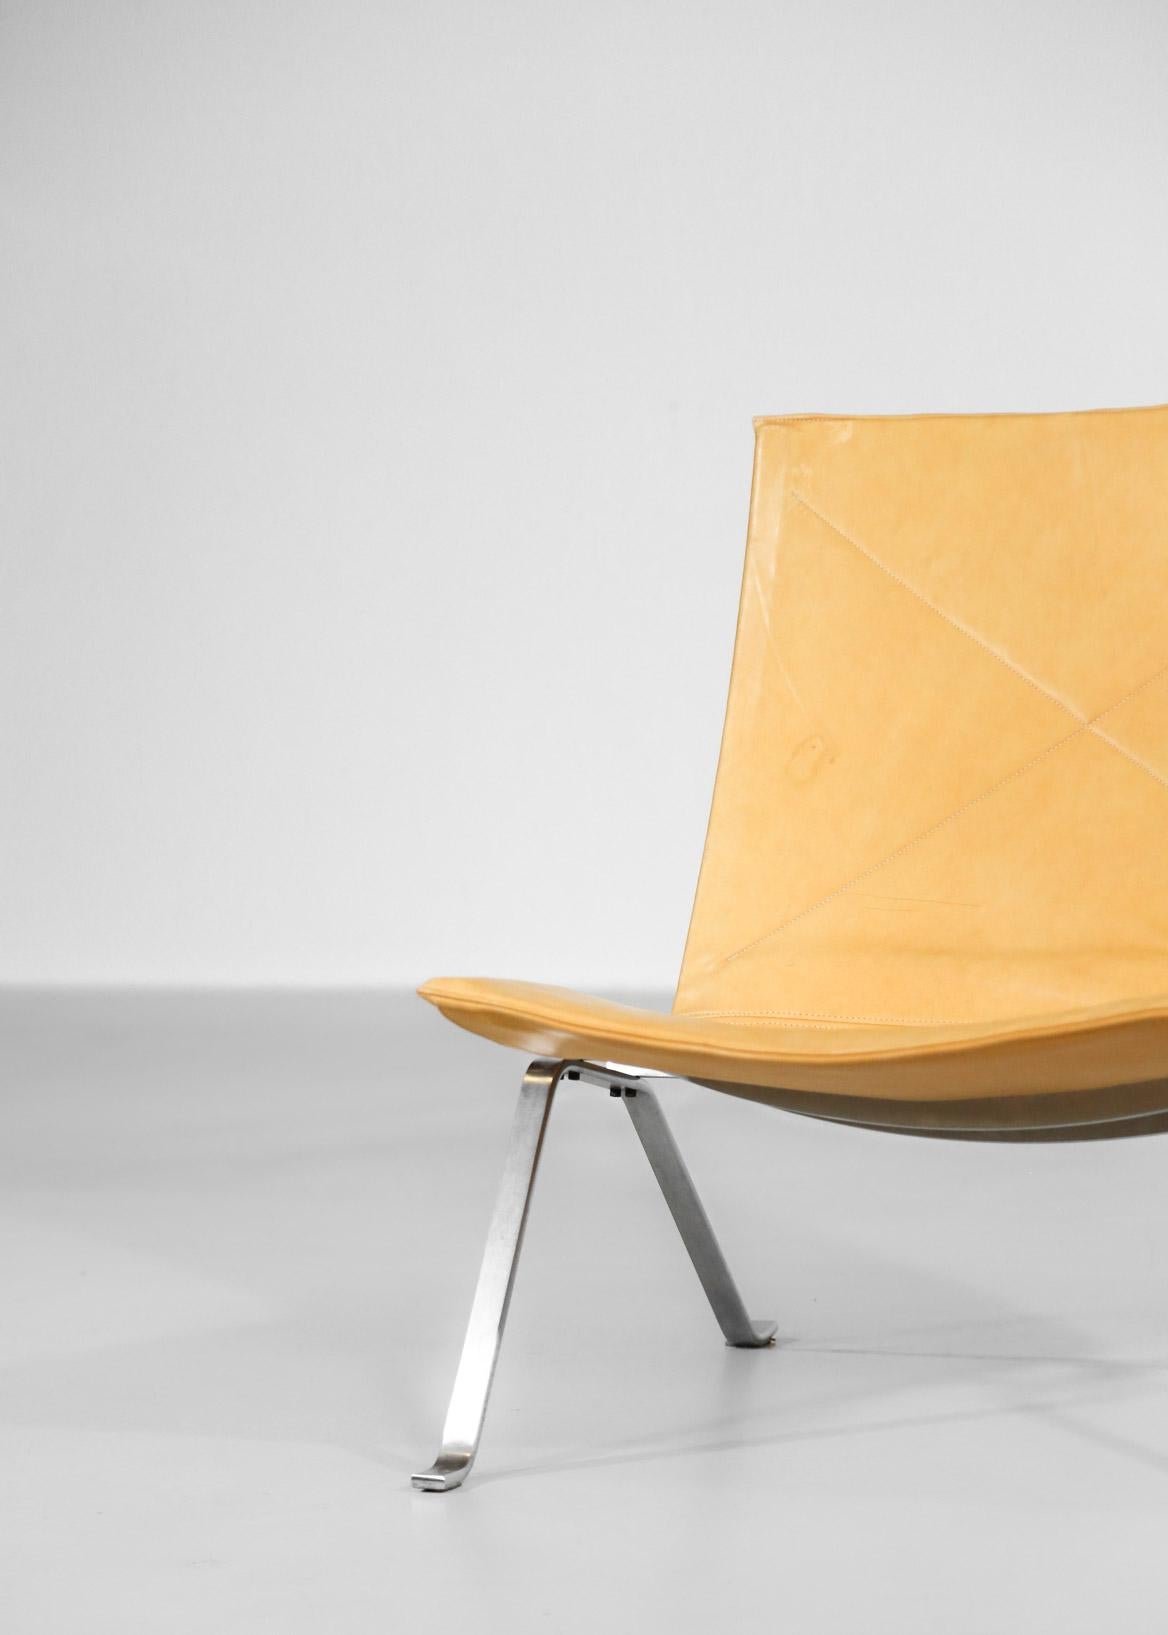 Metal Poul Kjaerholm Lounge Chair, Model PK22 for Kold Christensen